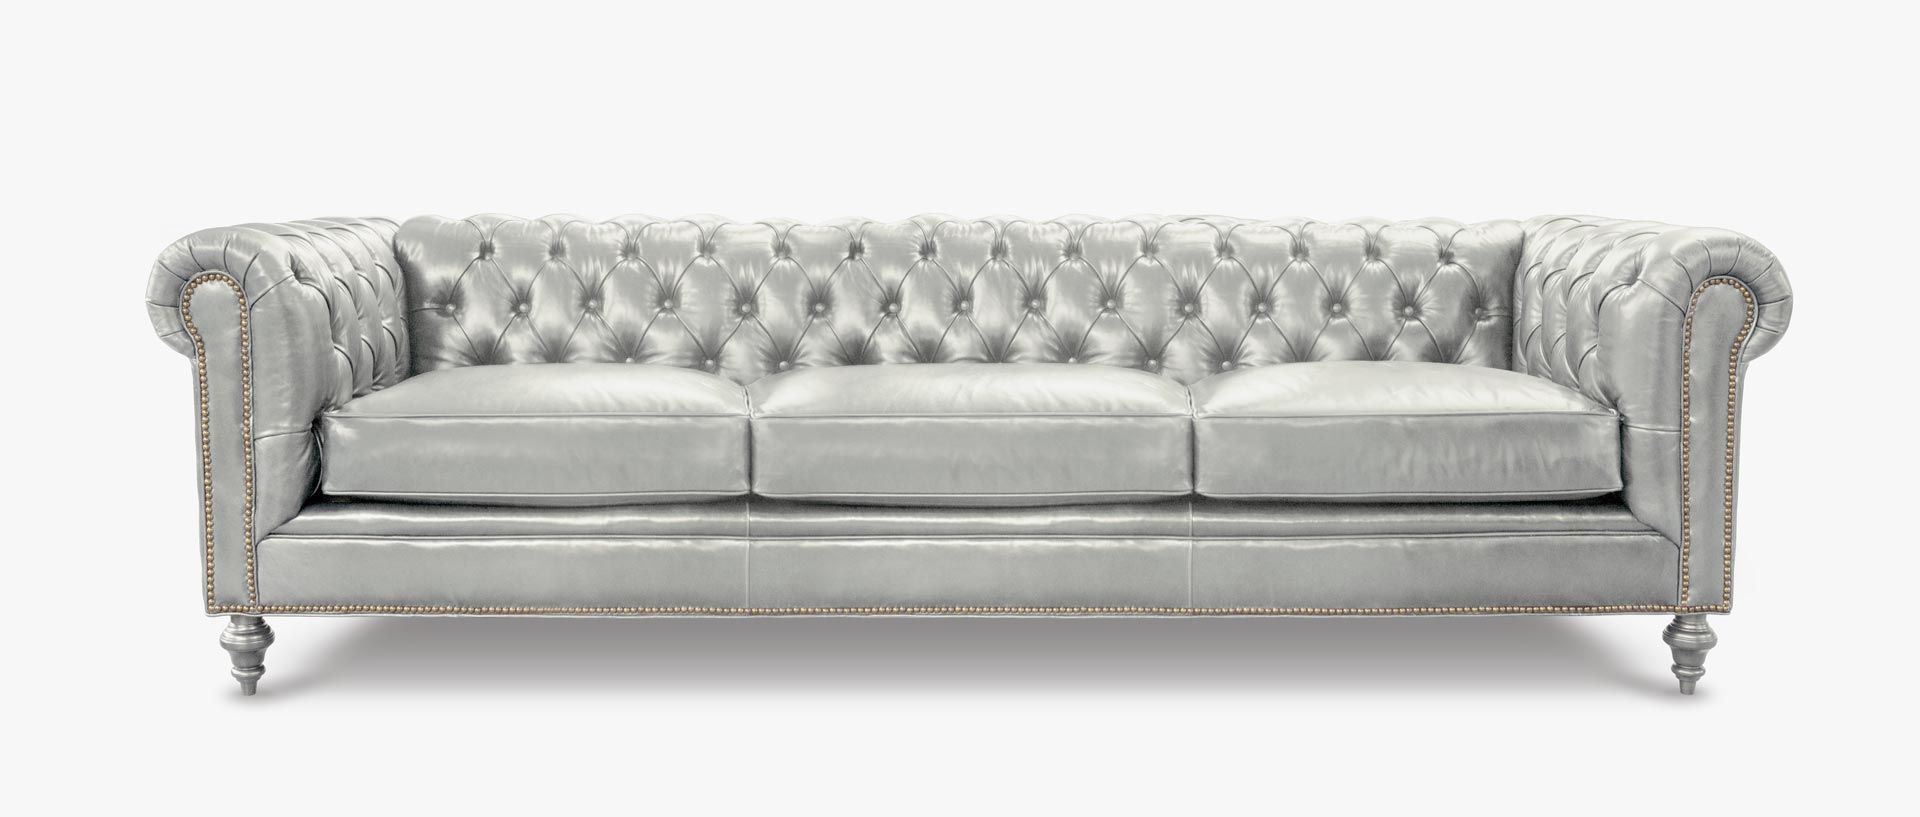 Fitzgerald Vintage White Leather Sofa